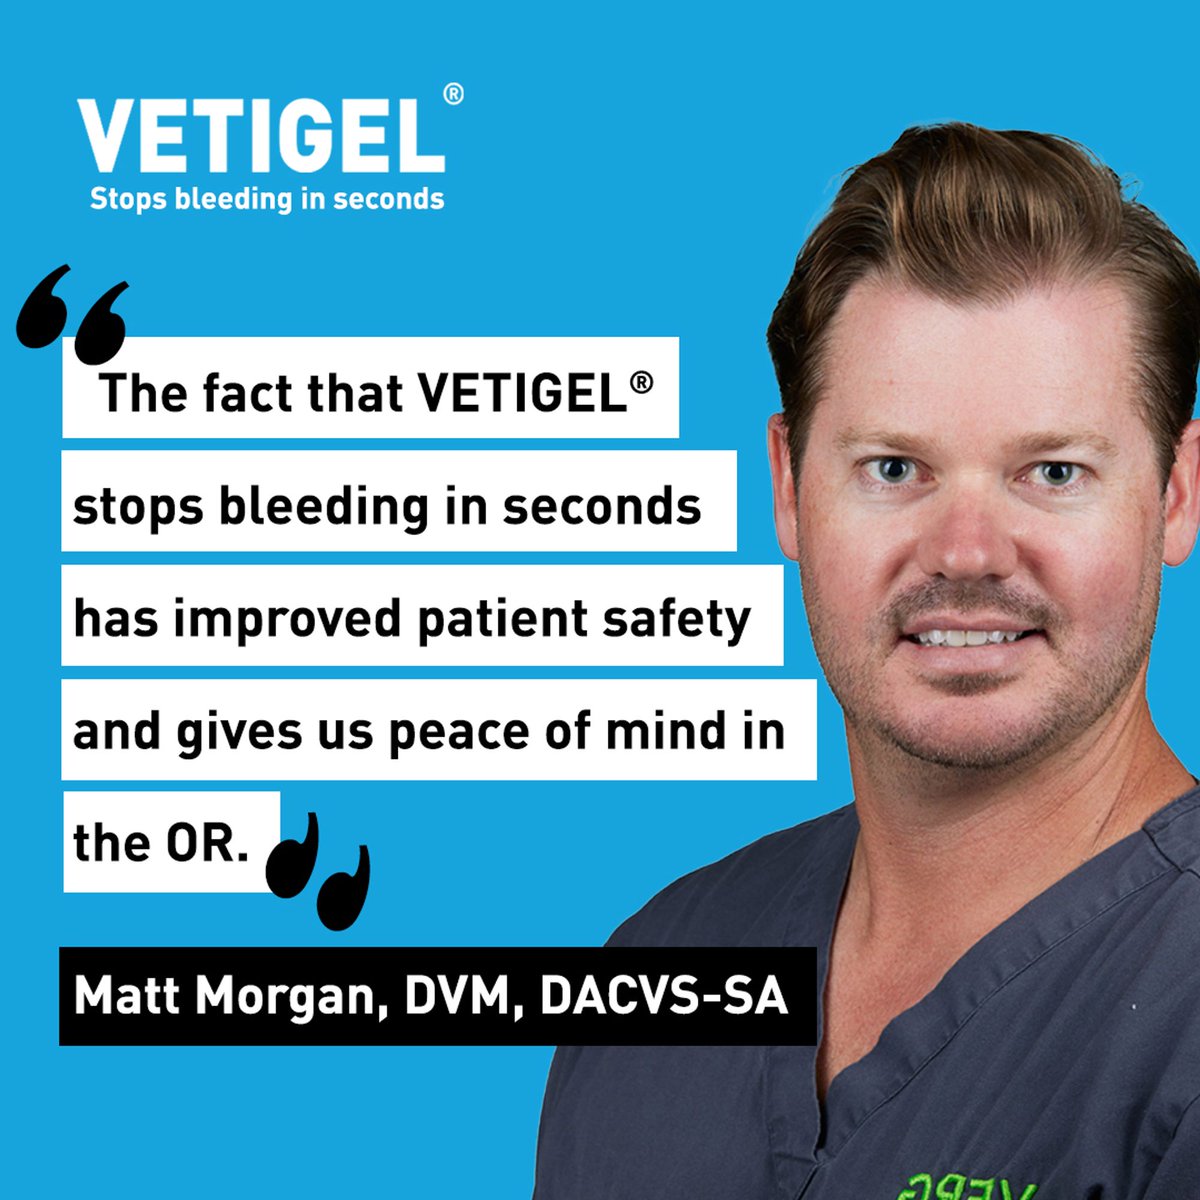 Has your veterinary practice been able to use VETIGEL® yet?

#animalhealth #vet #veterinarycare #womeninvetmed #veterinarysurgery #vetigel #vetgirl #vetnurse #veterinarytechnician #veterinaryclinic #vets #dvm